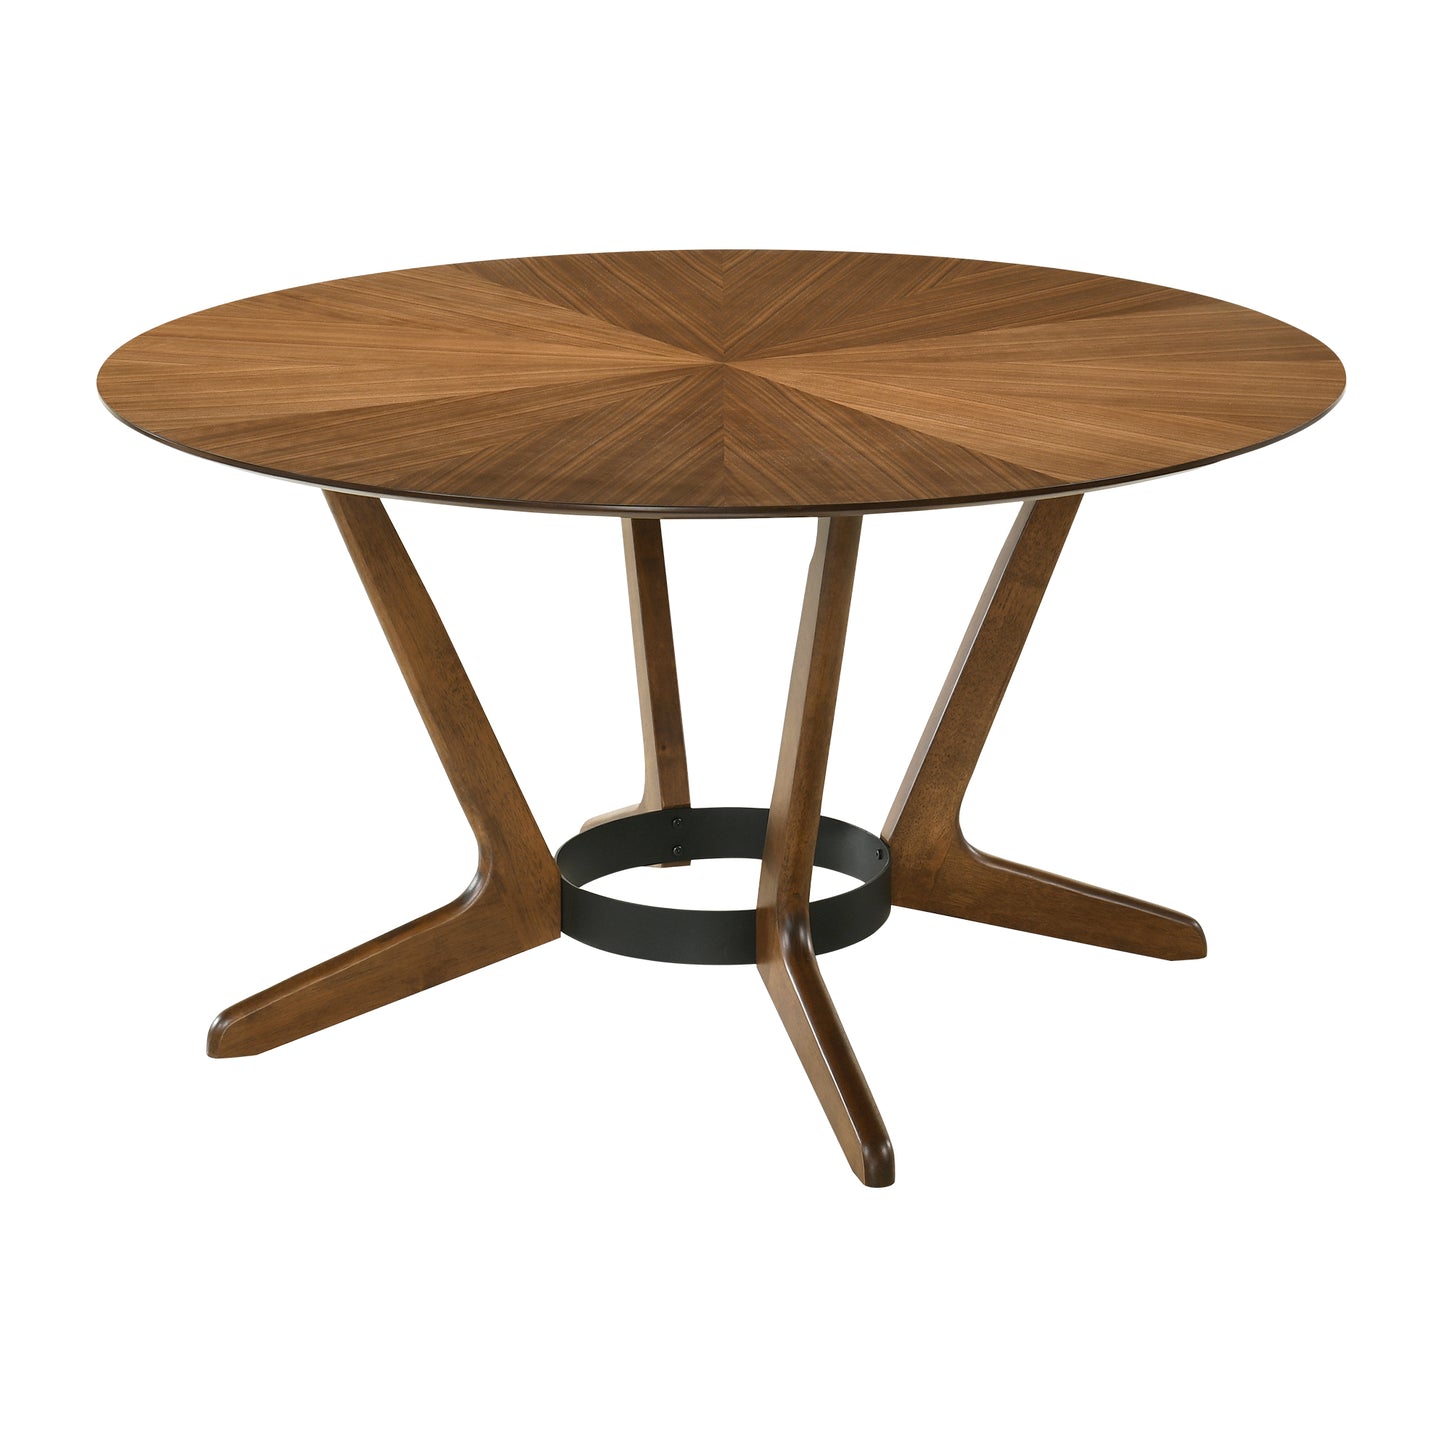 Santana 7 Piece Round Walnut Wood Dining Table Set with Orange Fabric